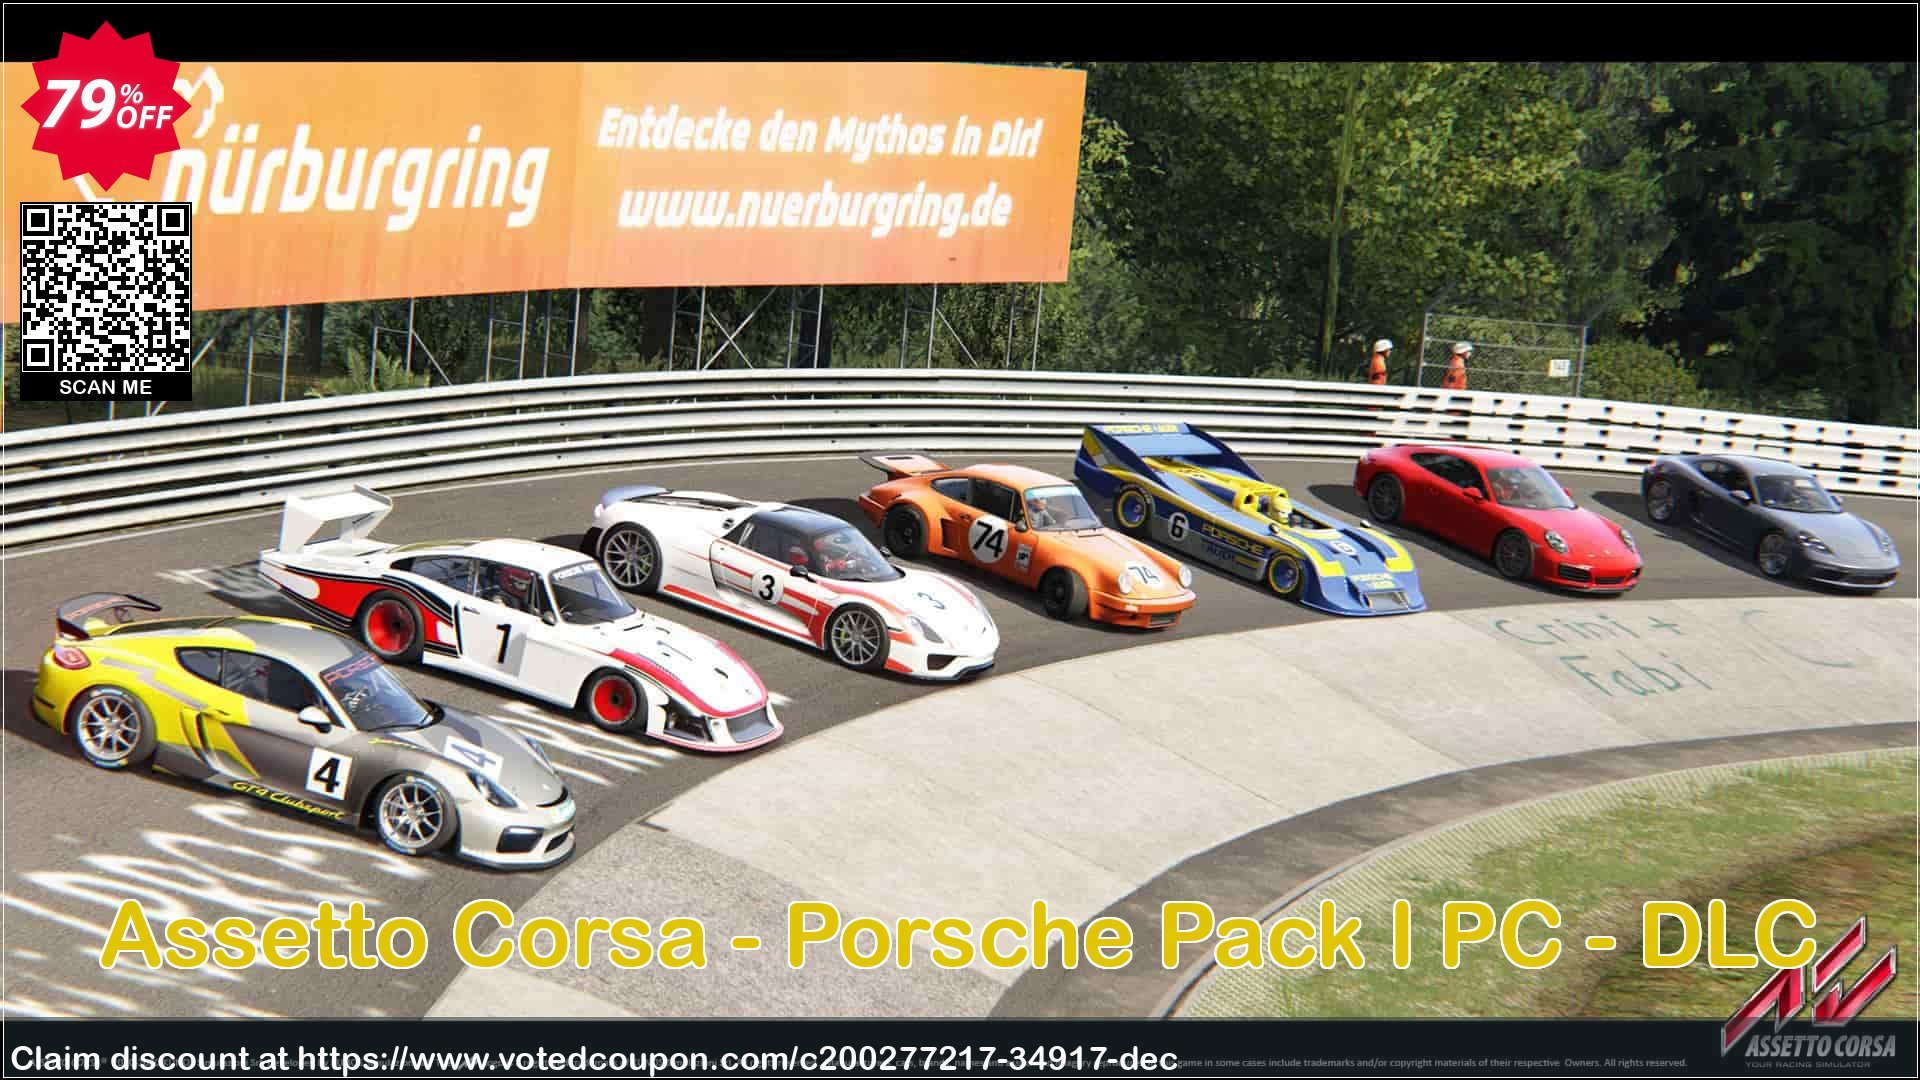 Assetto Corsa - Porsche Pack I PC - DLC Coupon Code May 2024, 79% OFF - VotedCoupon